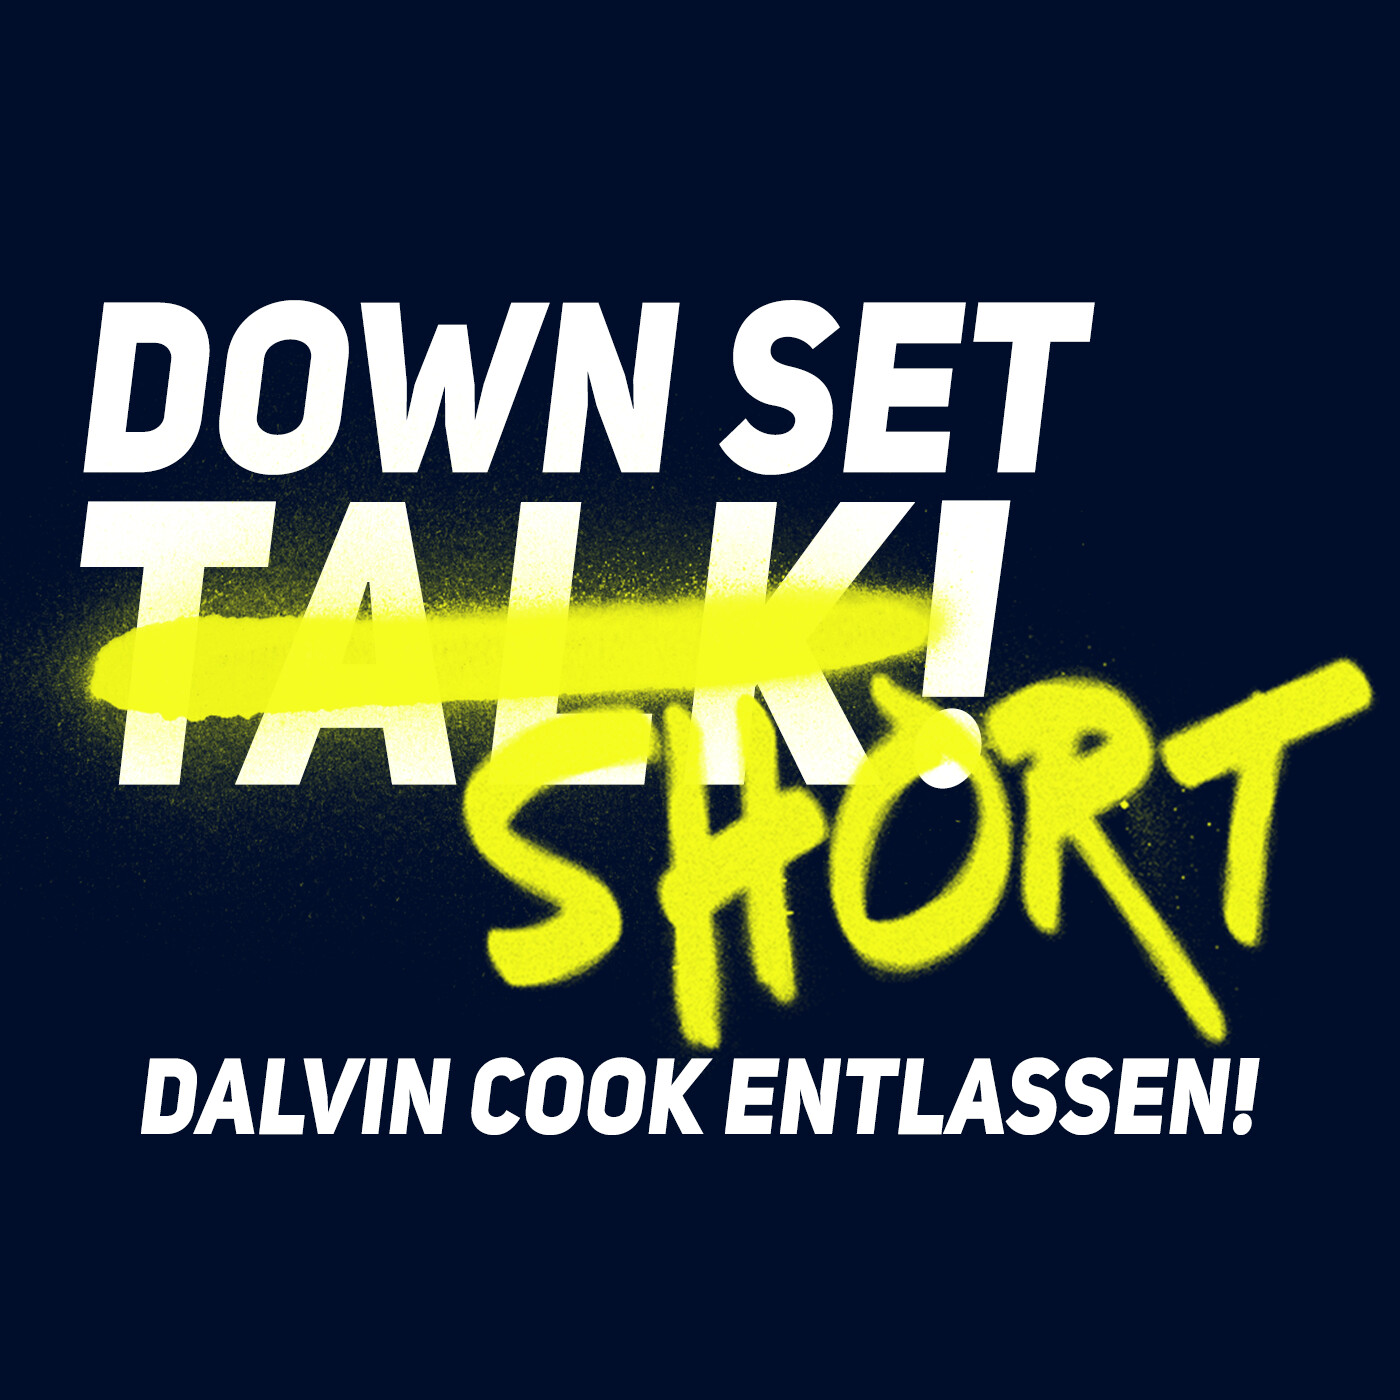 Dalvin Cook entlassen! Mehrere Spieler suspendiert! DOWN SET SHORT!